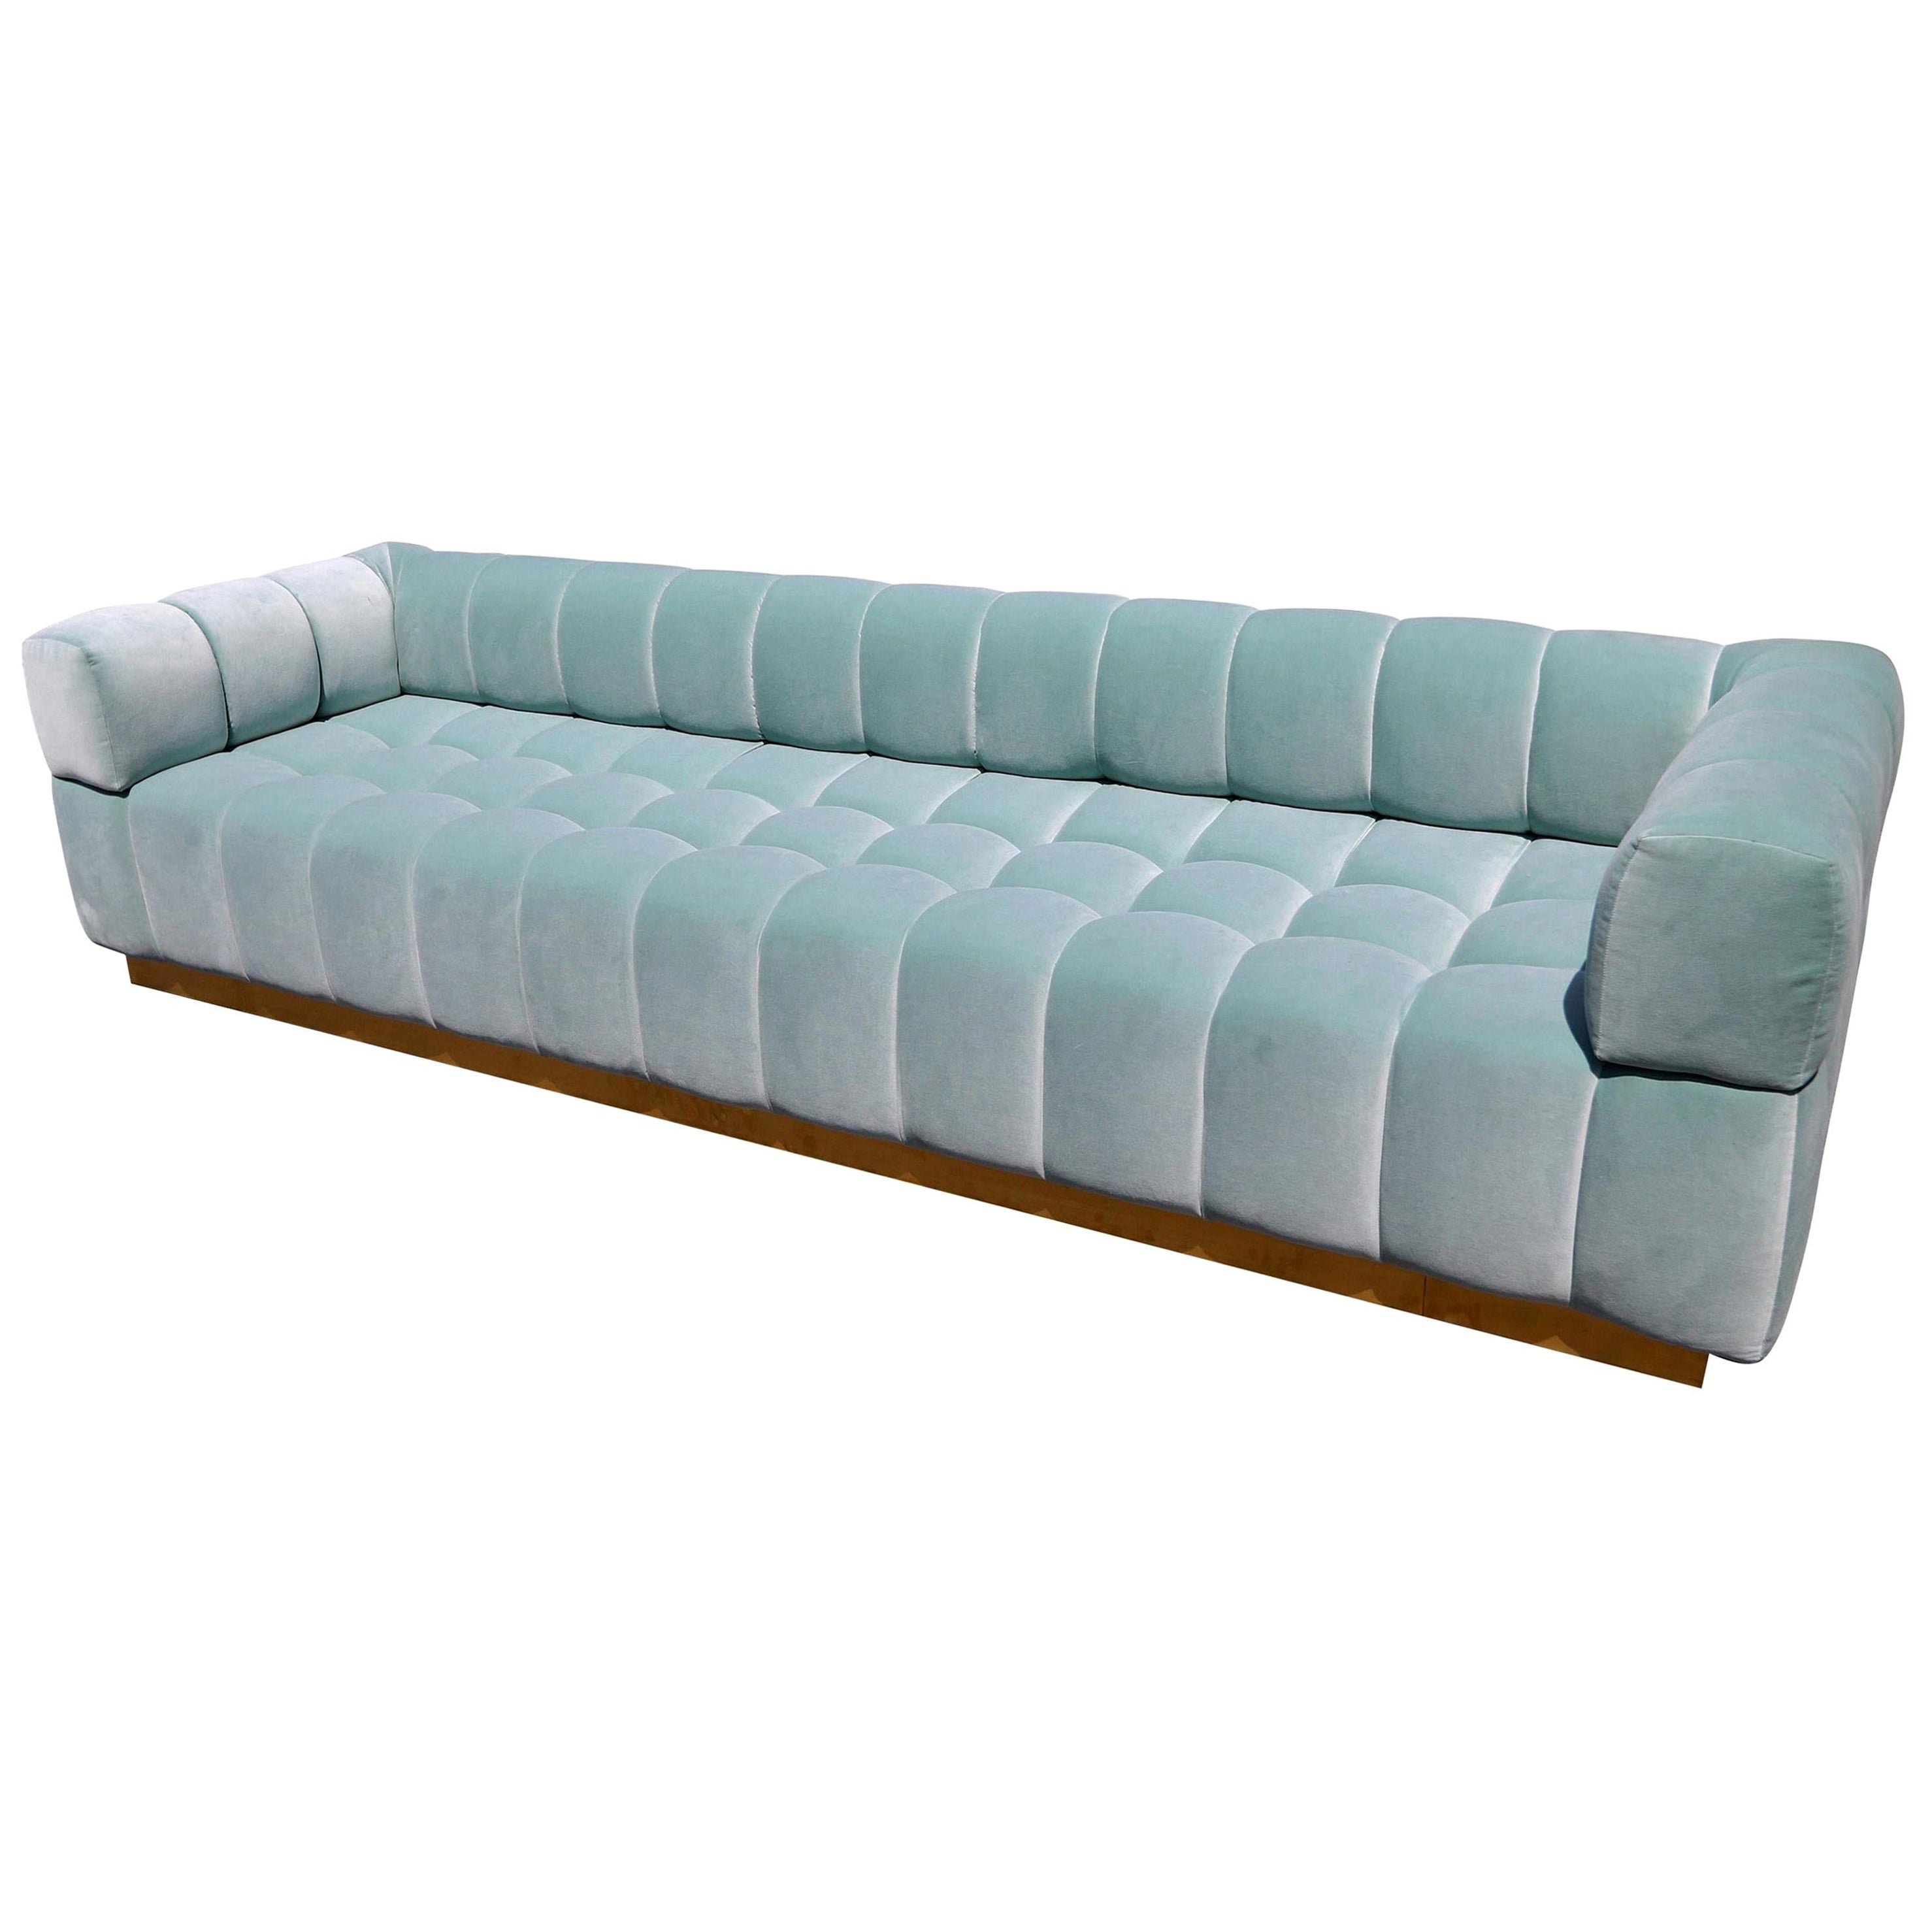 Custom Tufted Aqua Blue Velvet Sofa with Brass Base by Adesso Imports